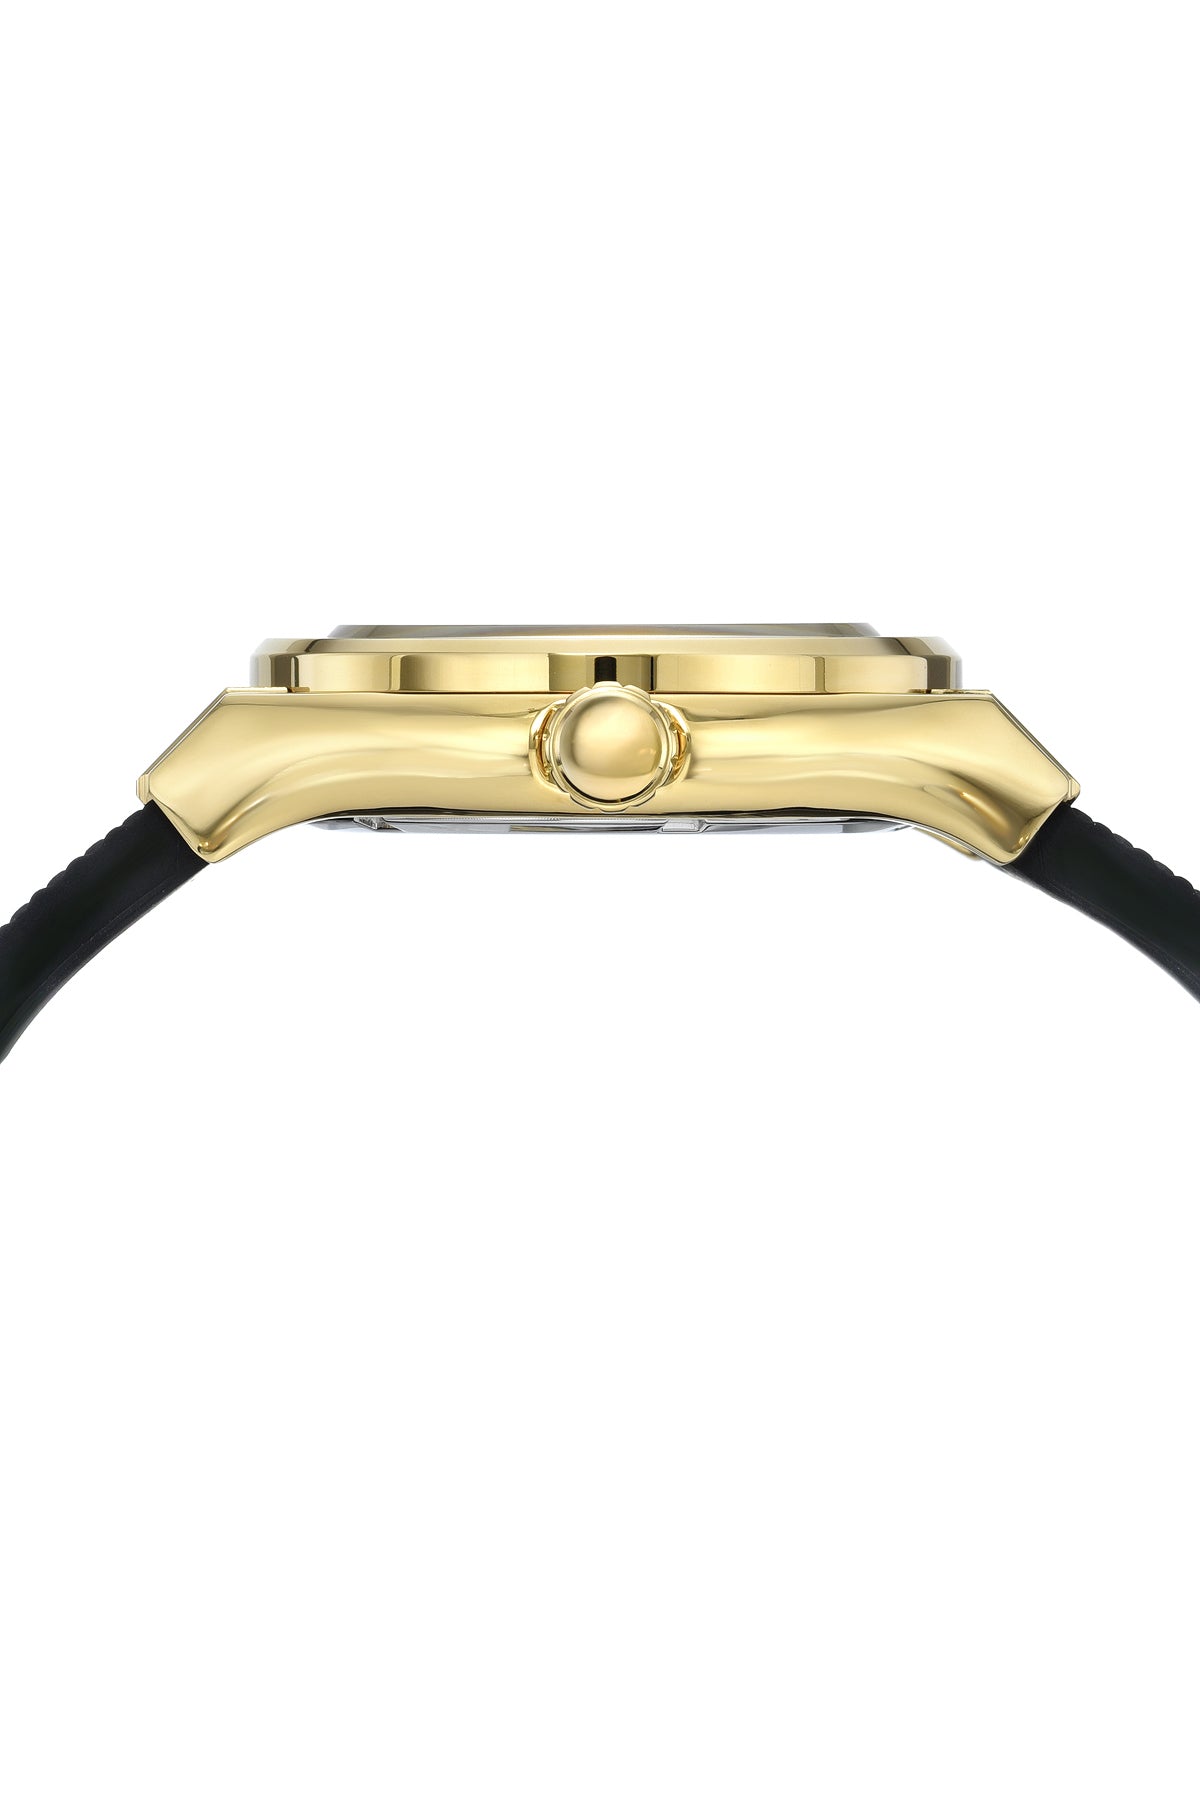 Porsamo Bleu Cruz Luxury Automatic Men's Silicon Strap Watch, With Skeleton Dial, Gold Black 1221CCRR